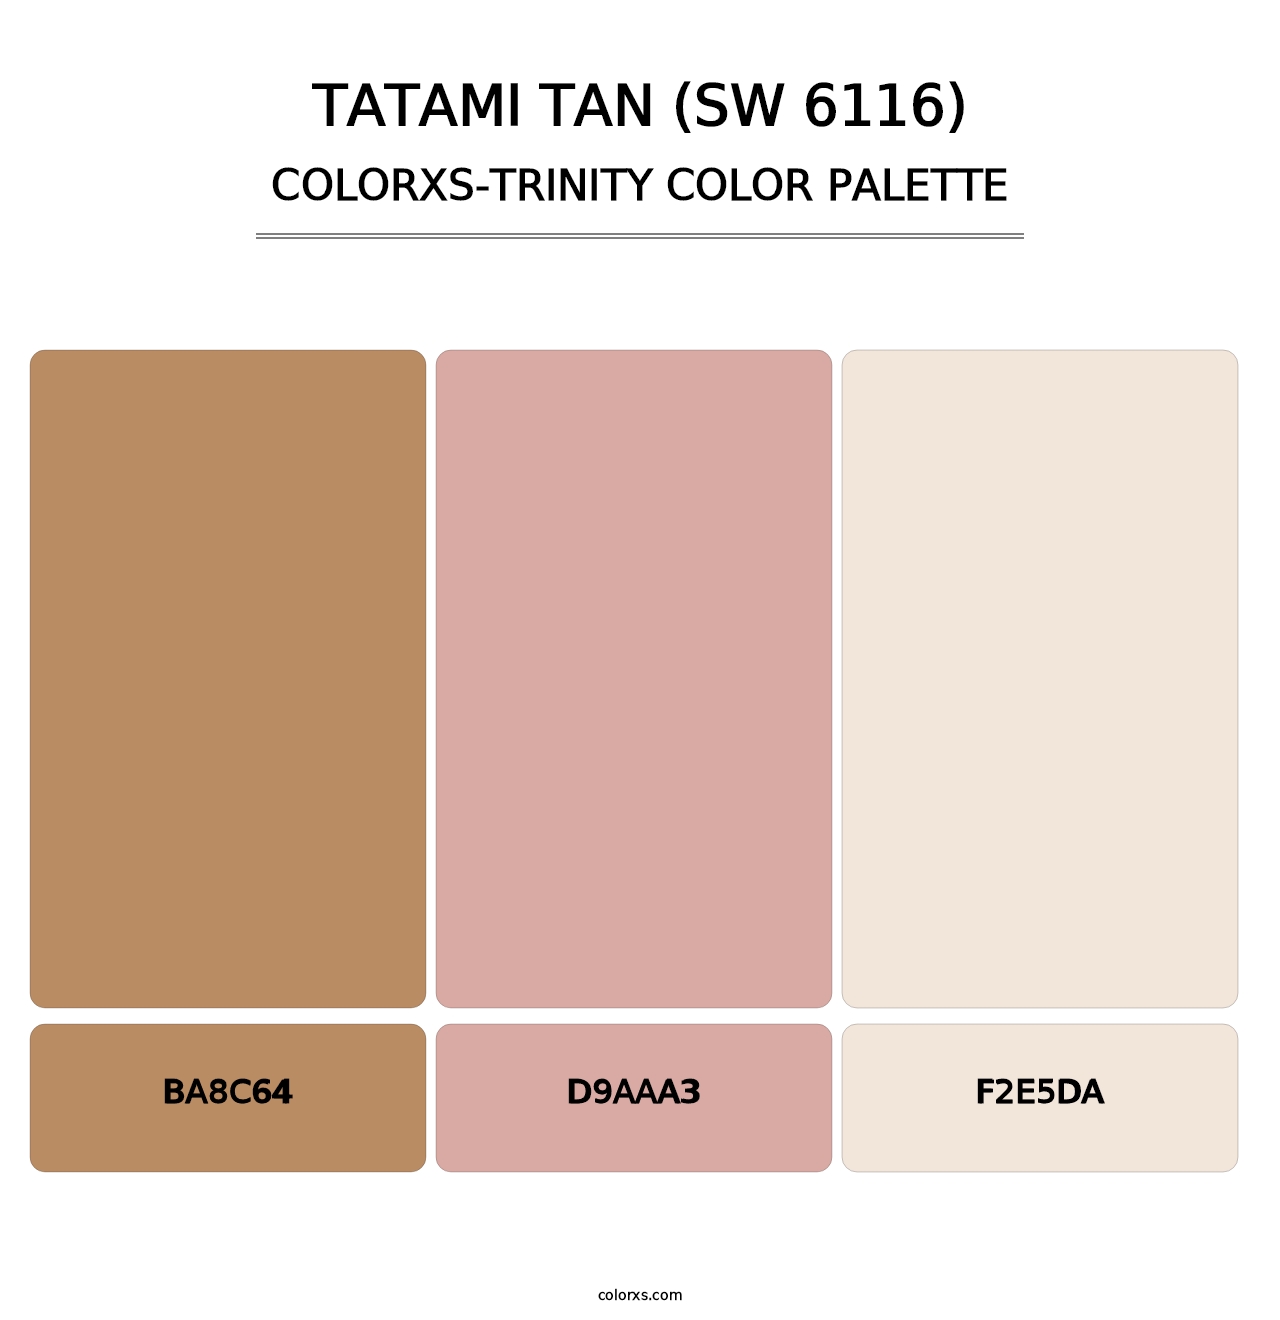 Tatami Tan (SW 6116) - Colorxs Trinity Palette